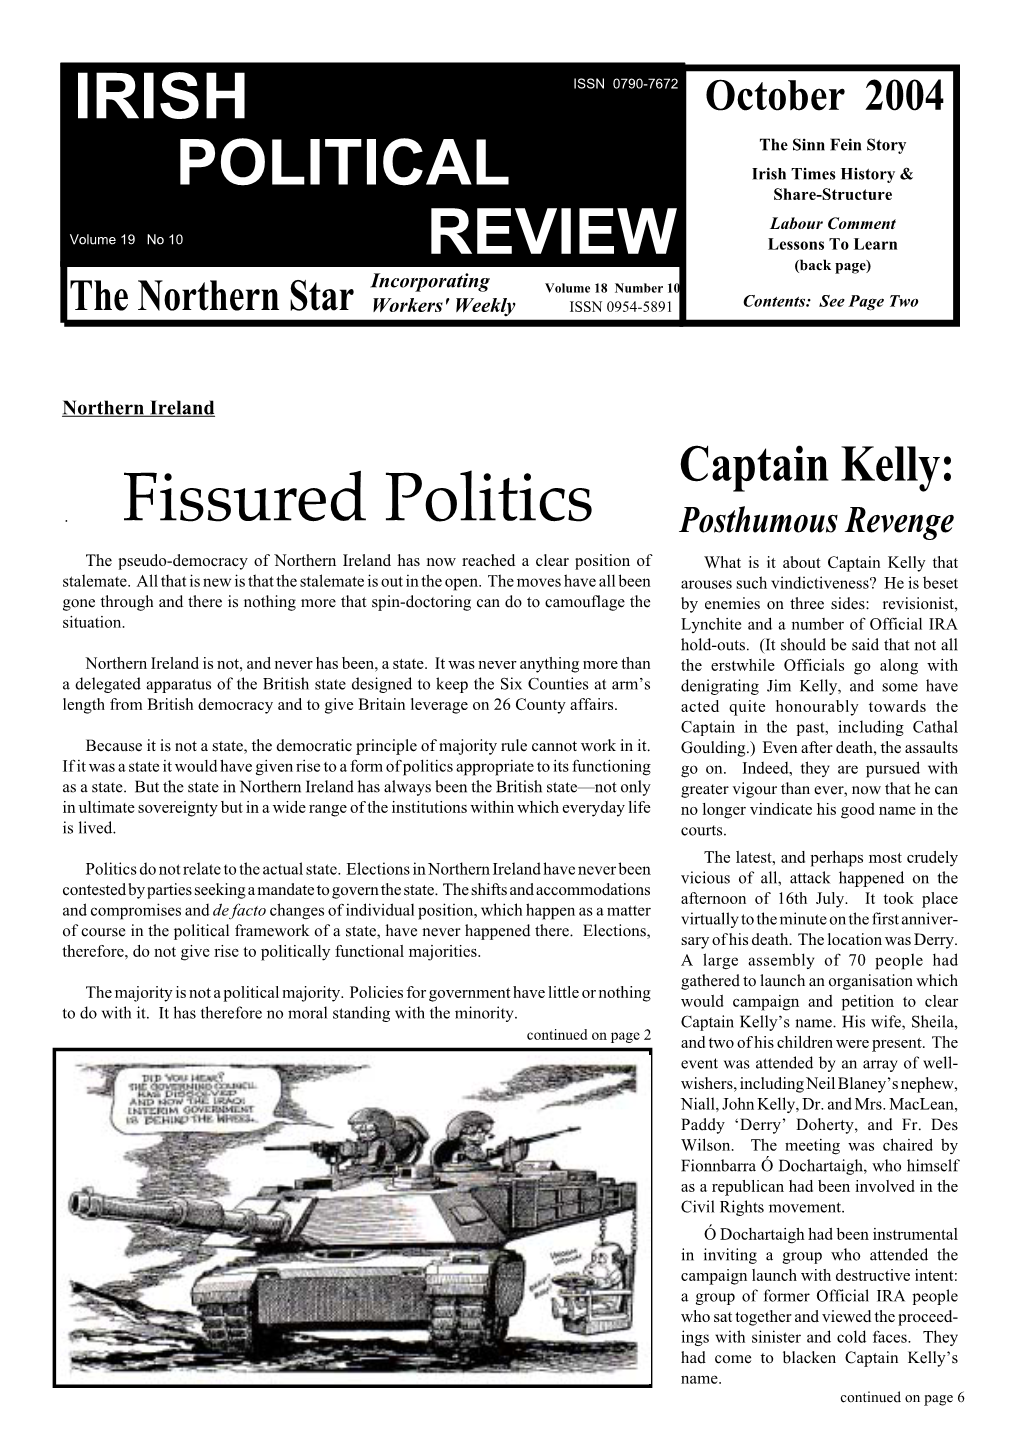 Irish Political Review, October 2004